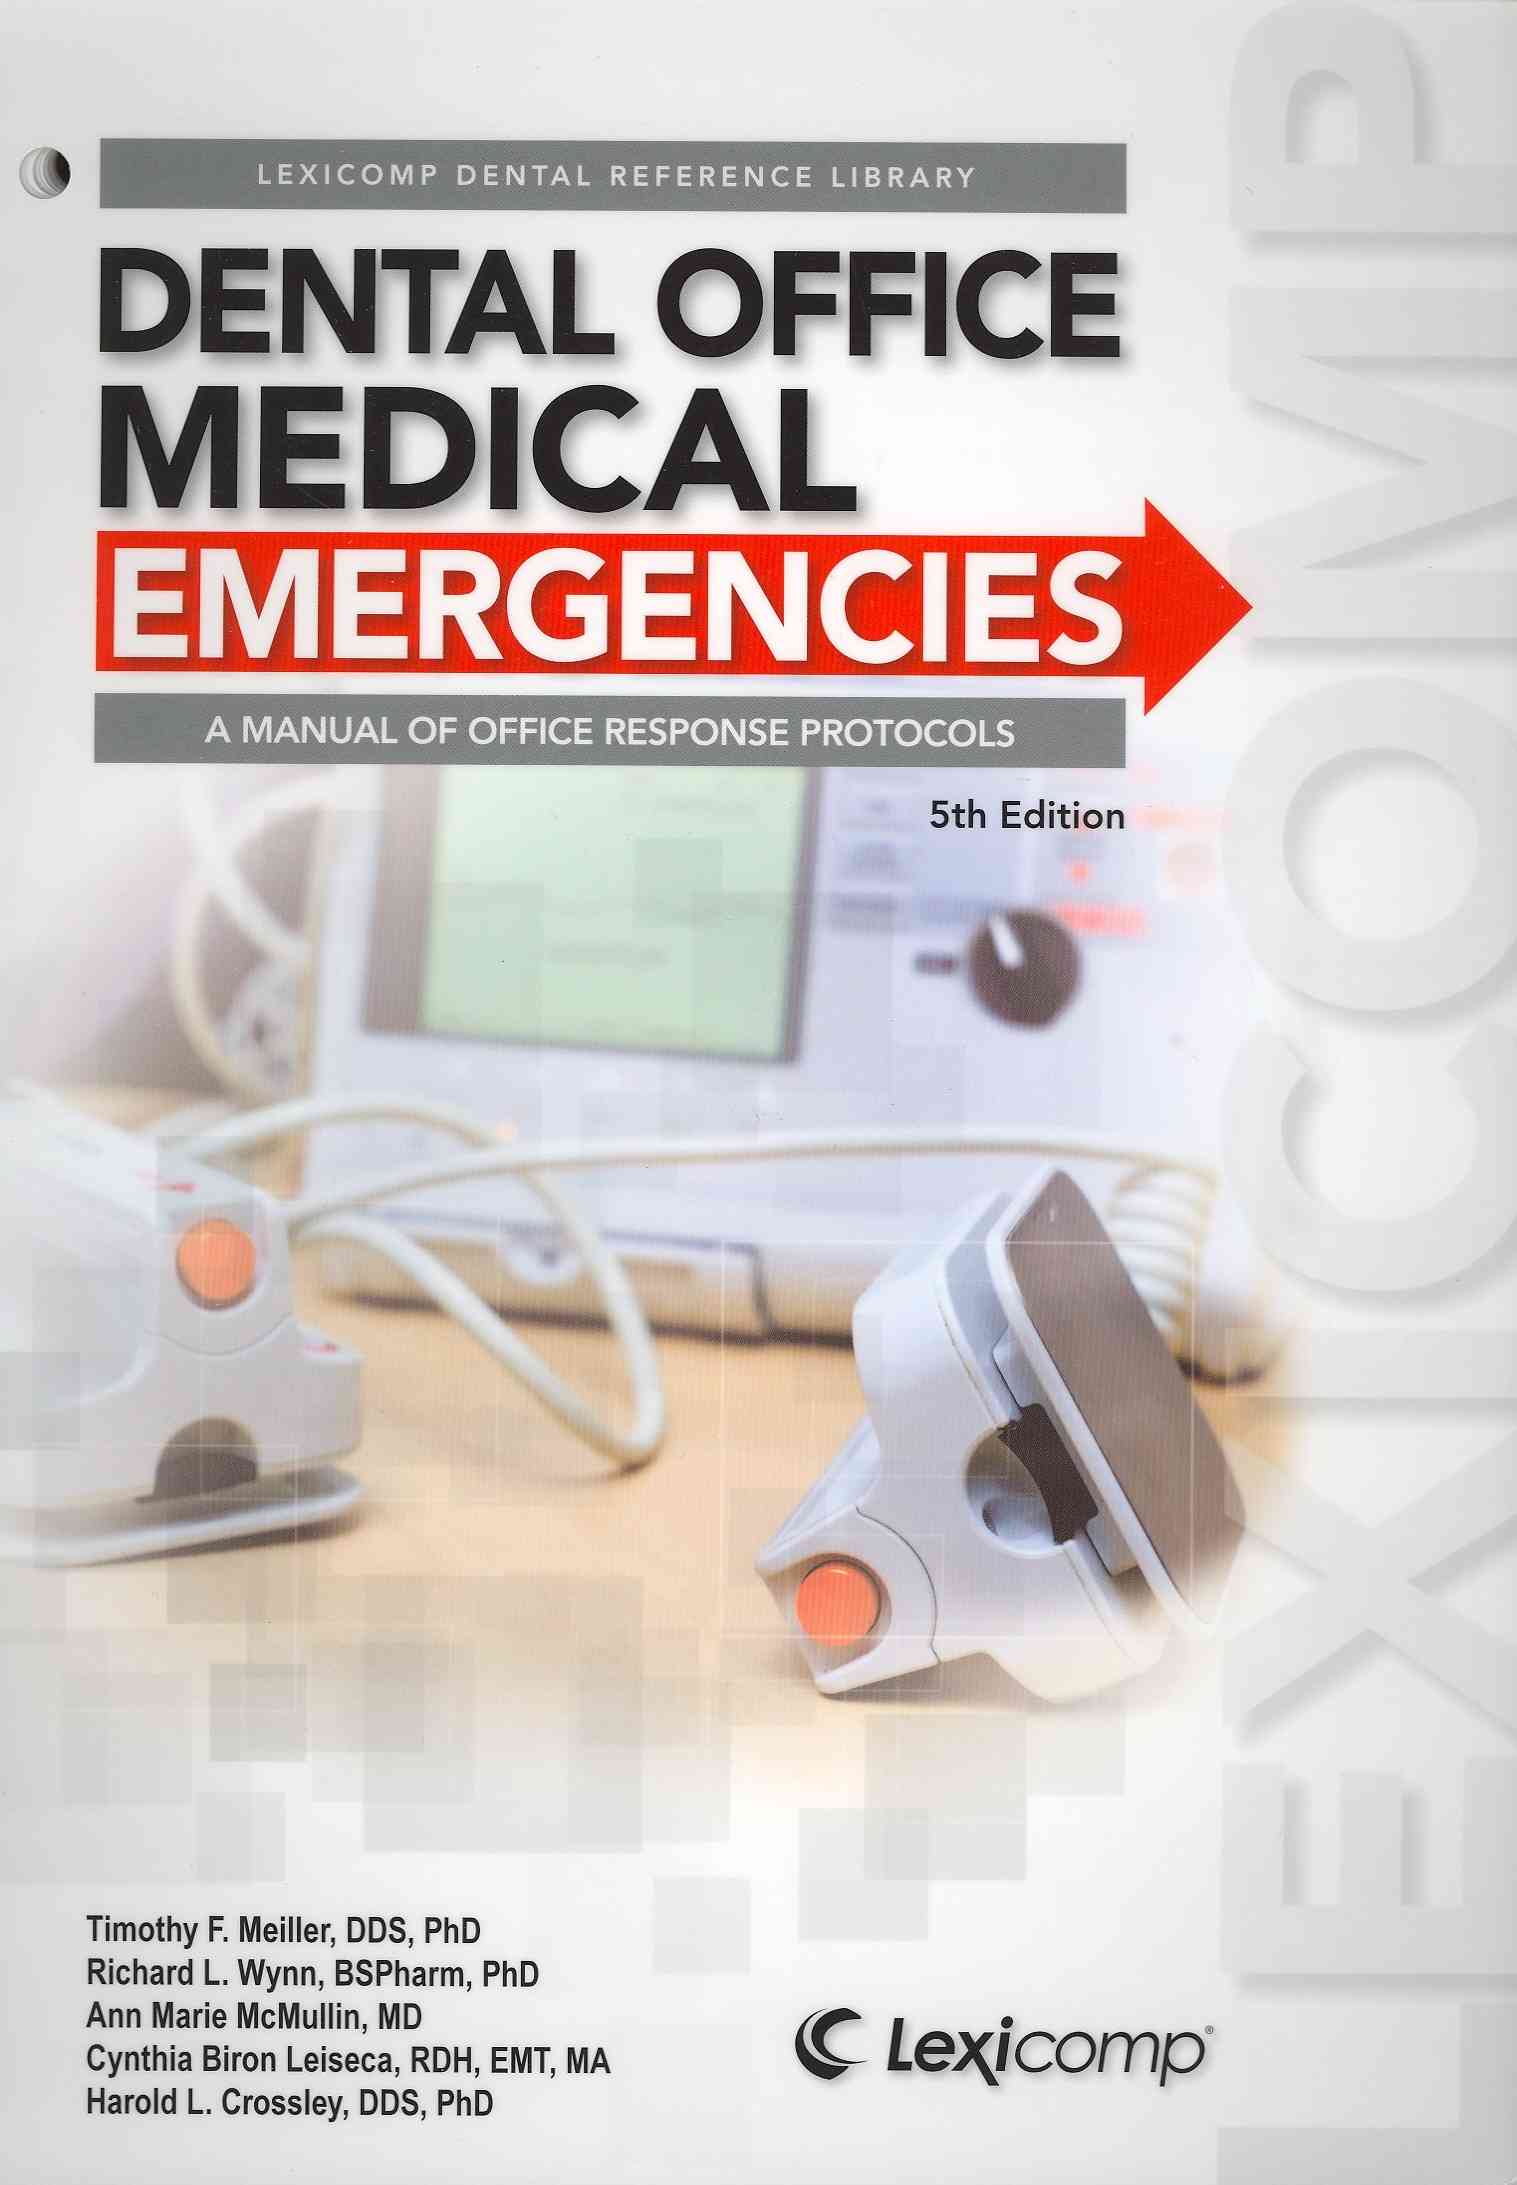 Dental Office Medical Emergencies: A Manual of Office Response Protocols Timothy F. Meiller, Richard L. Wynn, Ann Marie McMullin and Cynthia Biron